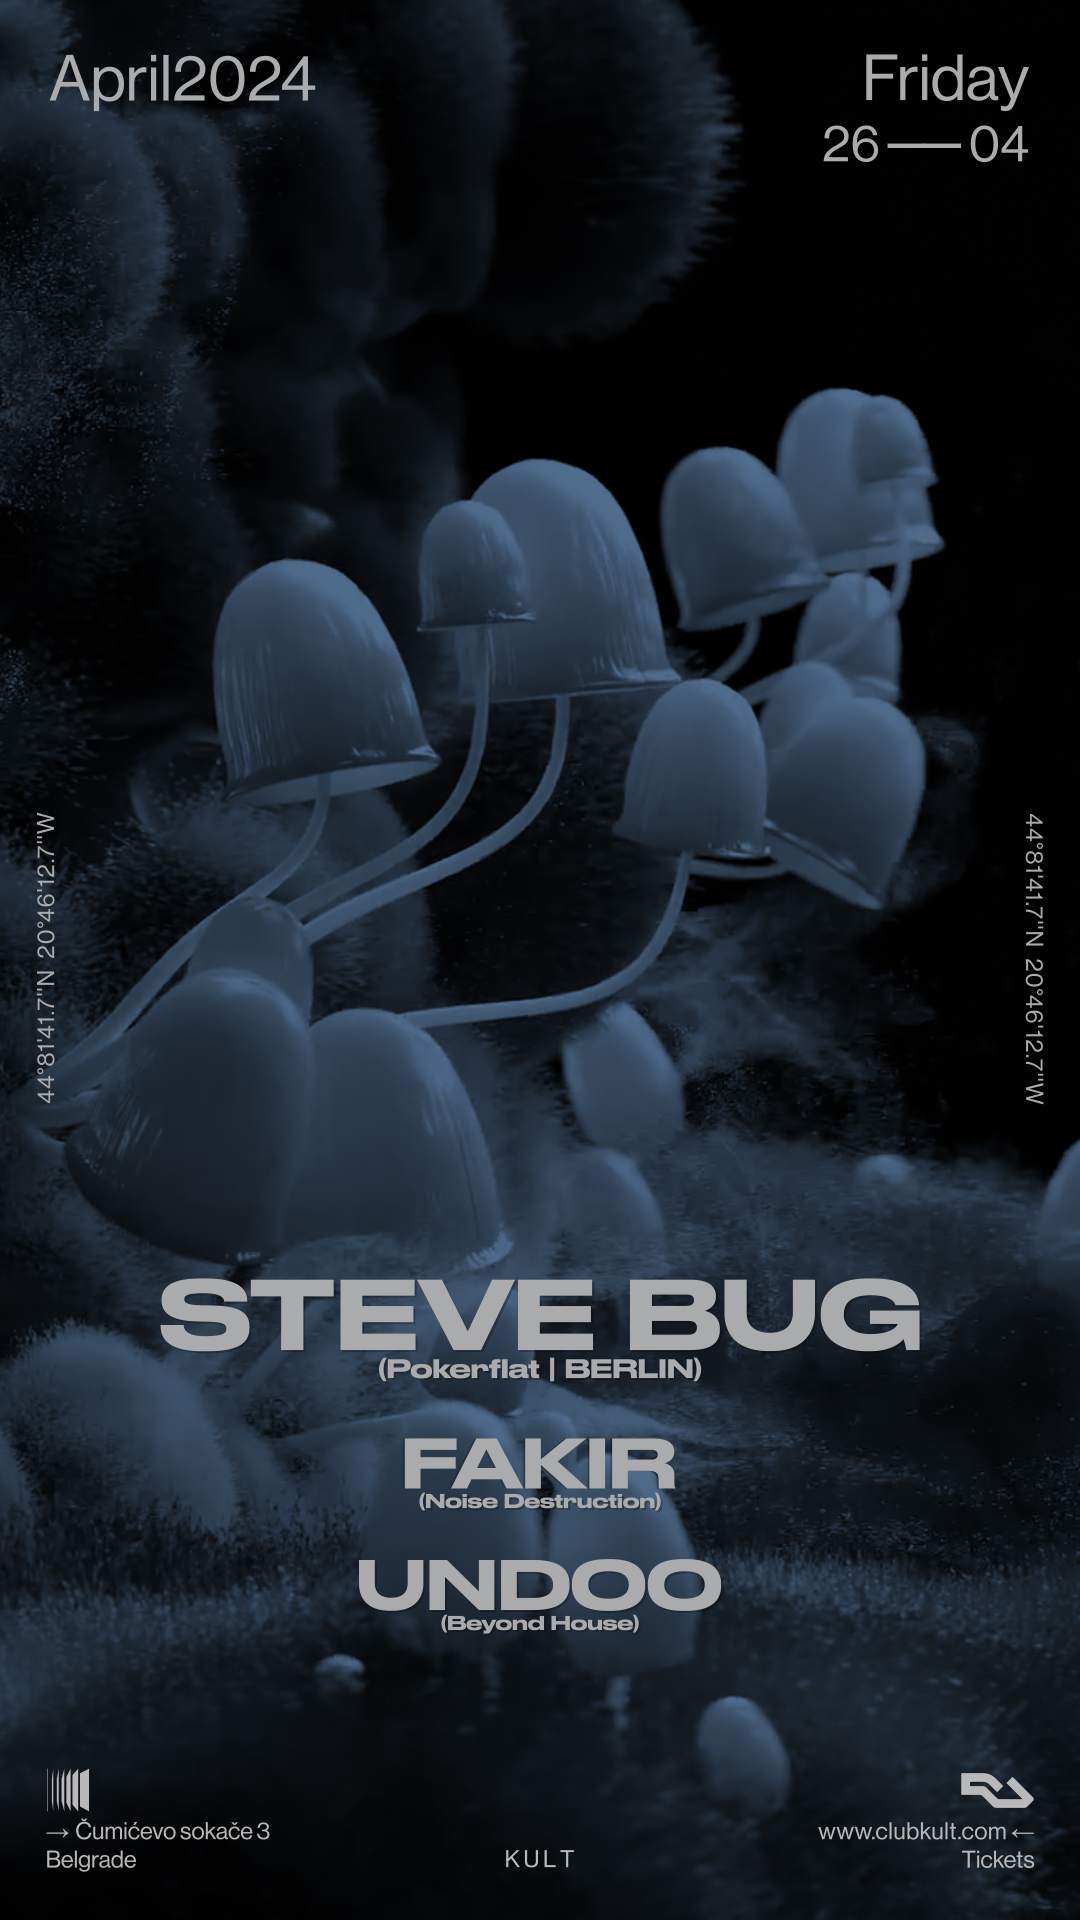 Steve Bug at KULT - フライヤー表